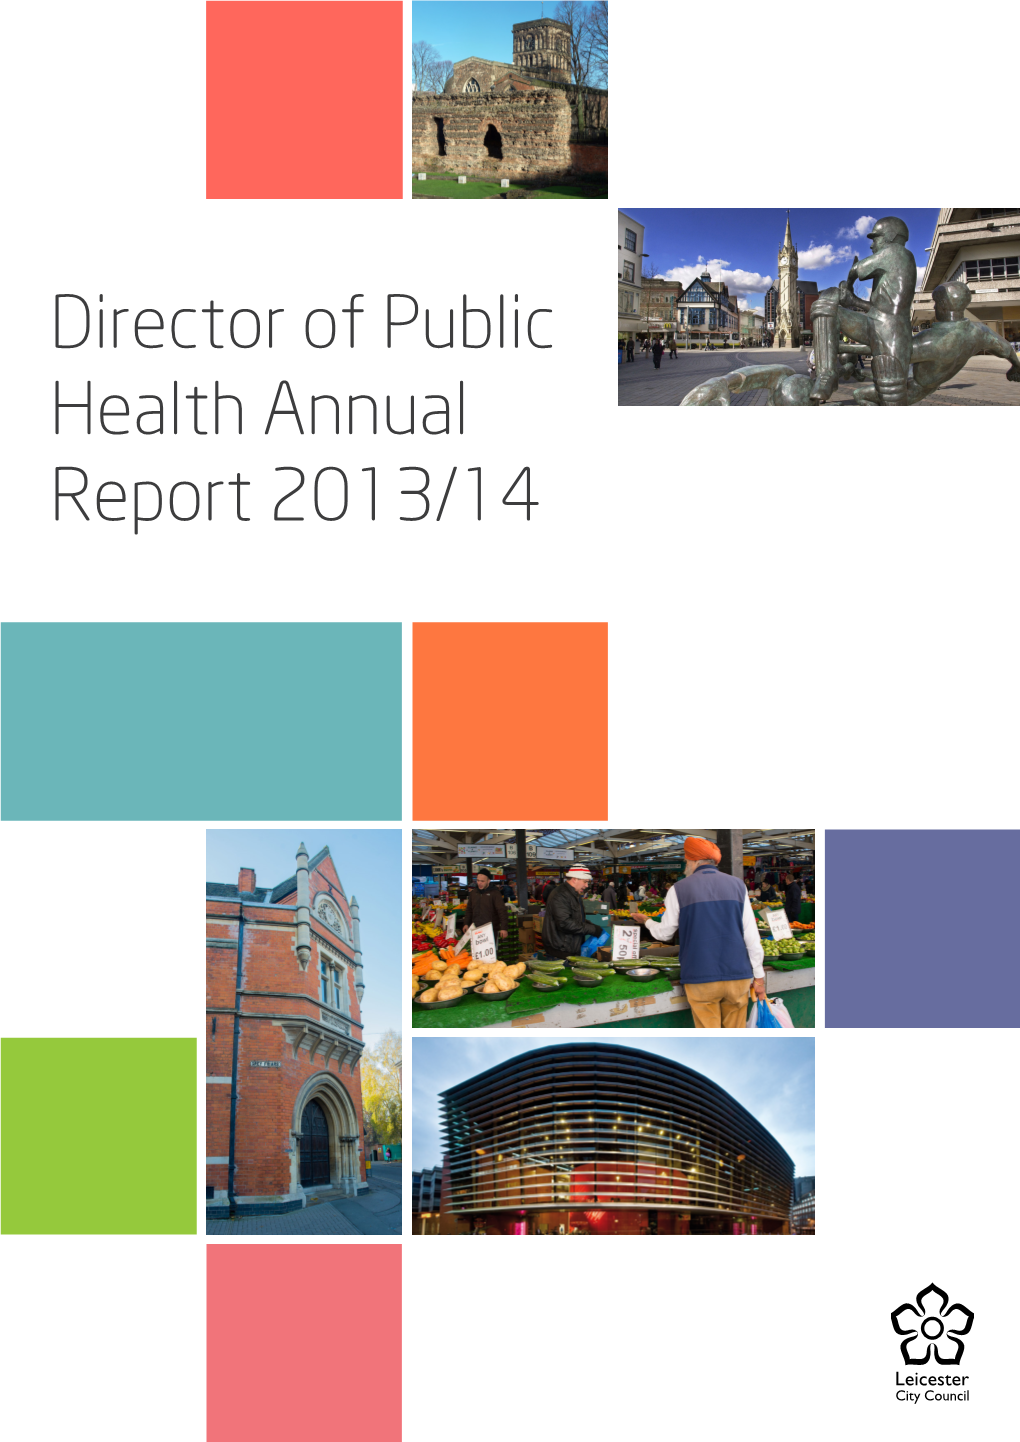 Director of Public Health Annual Report 2013/14 2 Director of Public Health Annual Report 2013/14 Director of Public Health Annual Report 2013/14 3